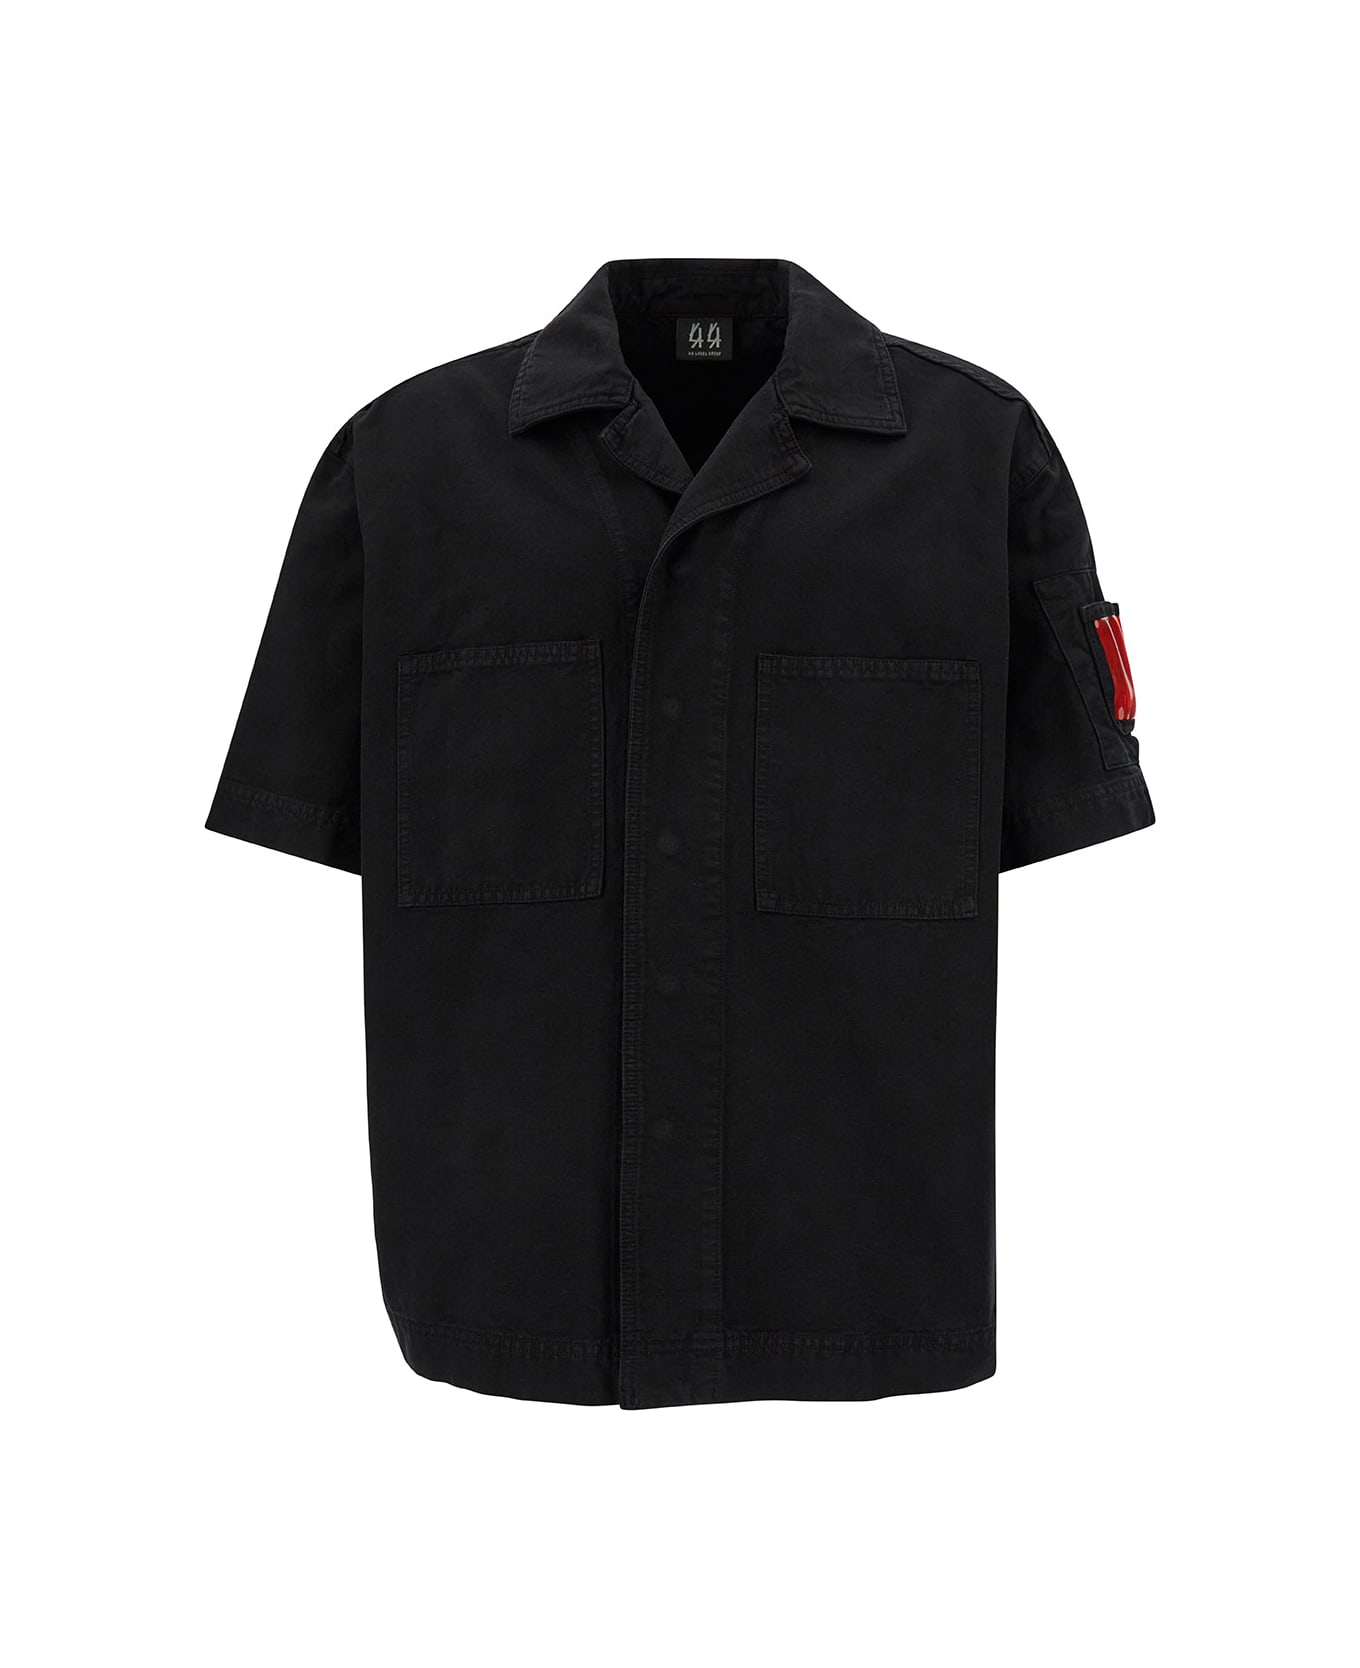 44 Label Group Black Bowling Shirt With Logo Patch In Cotton Denim Man - Black